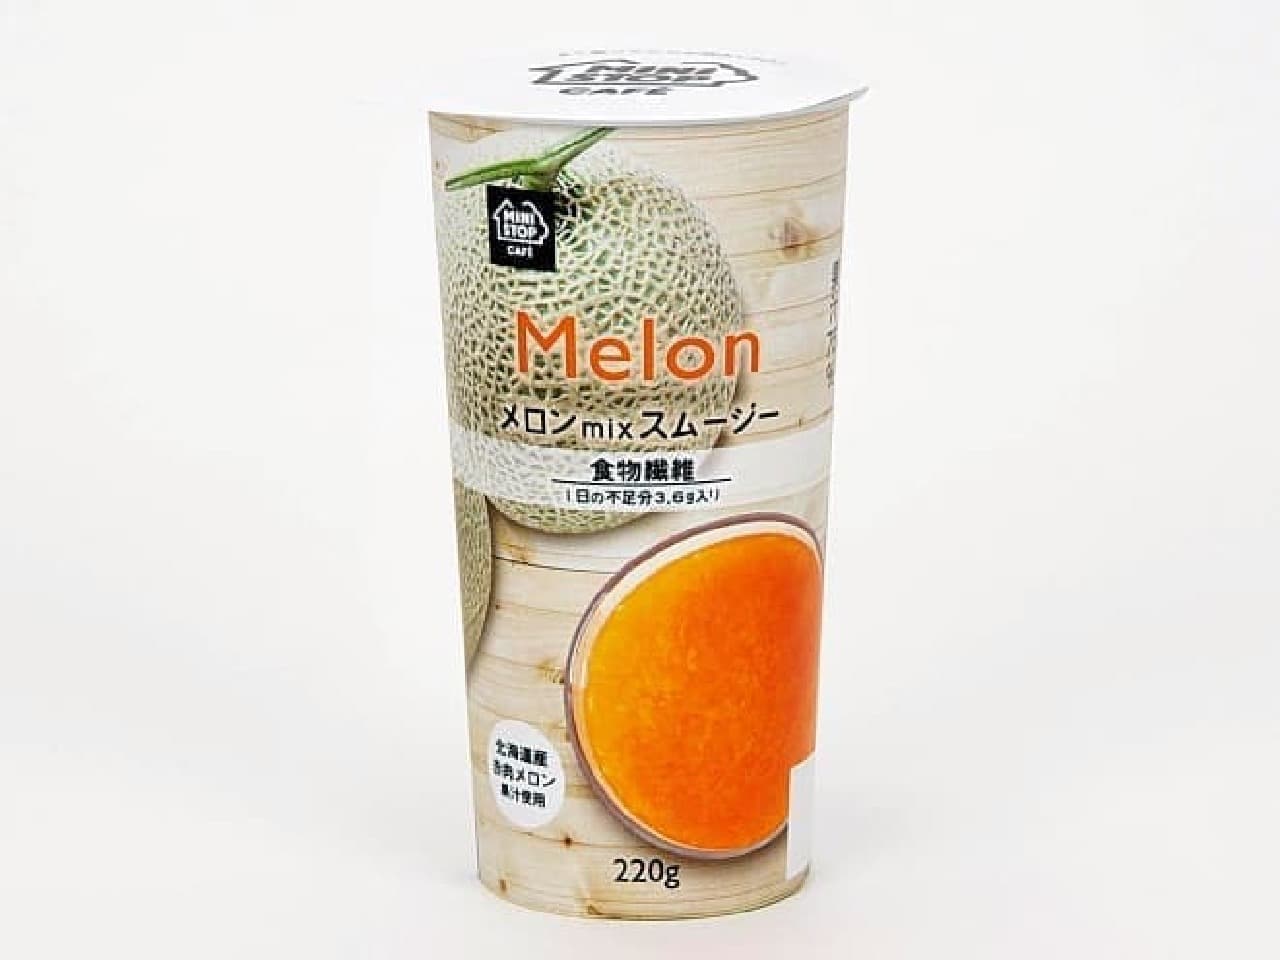 Ministop "Melon mix smoothie"